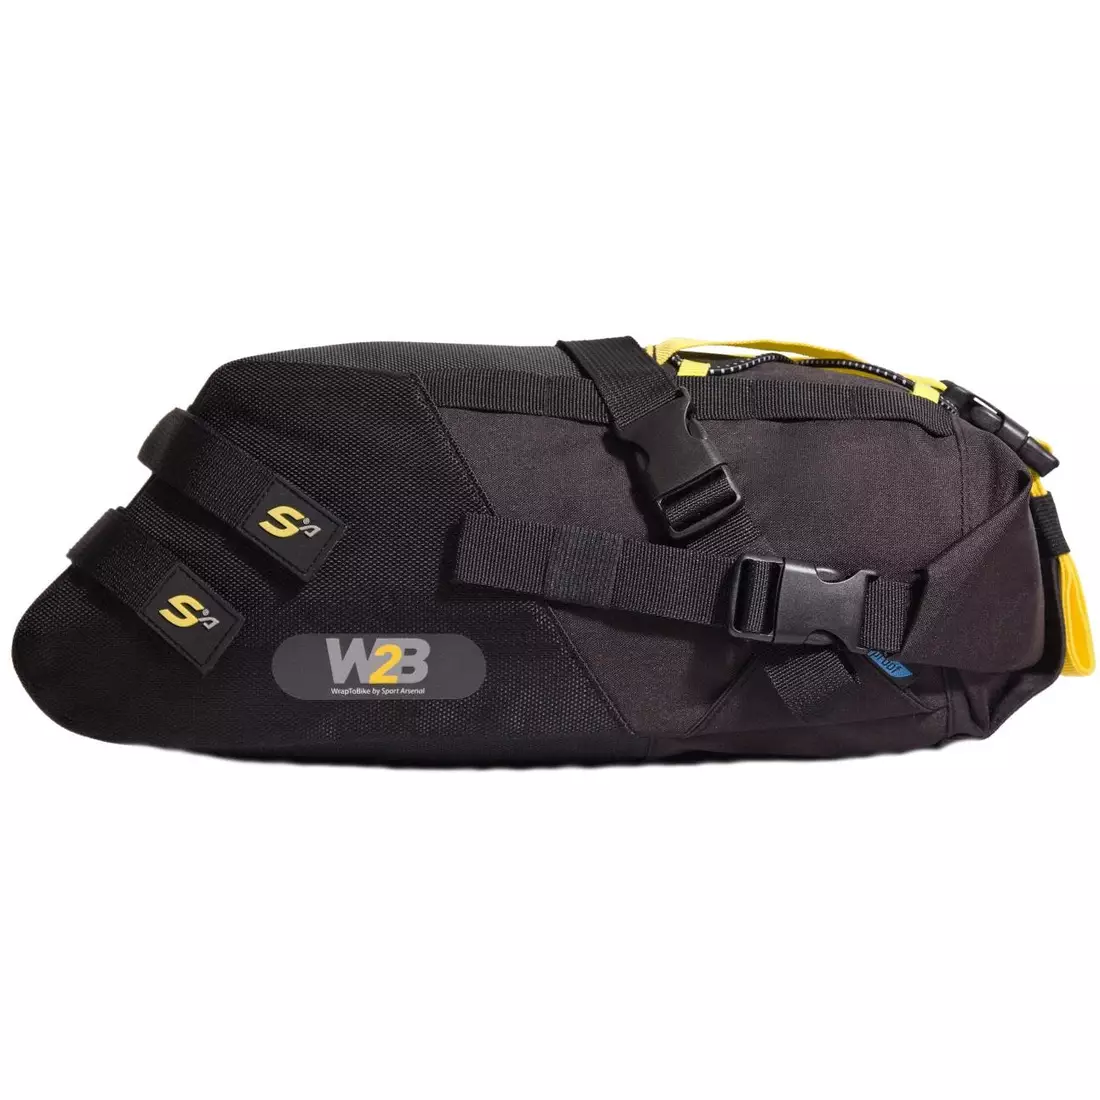 SPORT ARSENAL 603 W2B saddlebag, waterproof